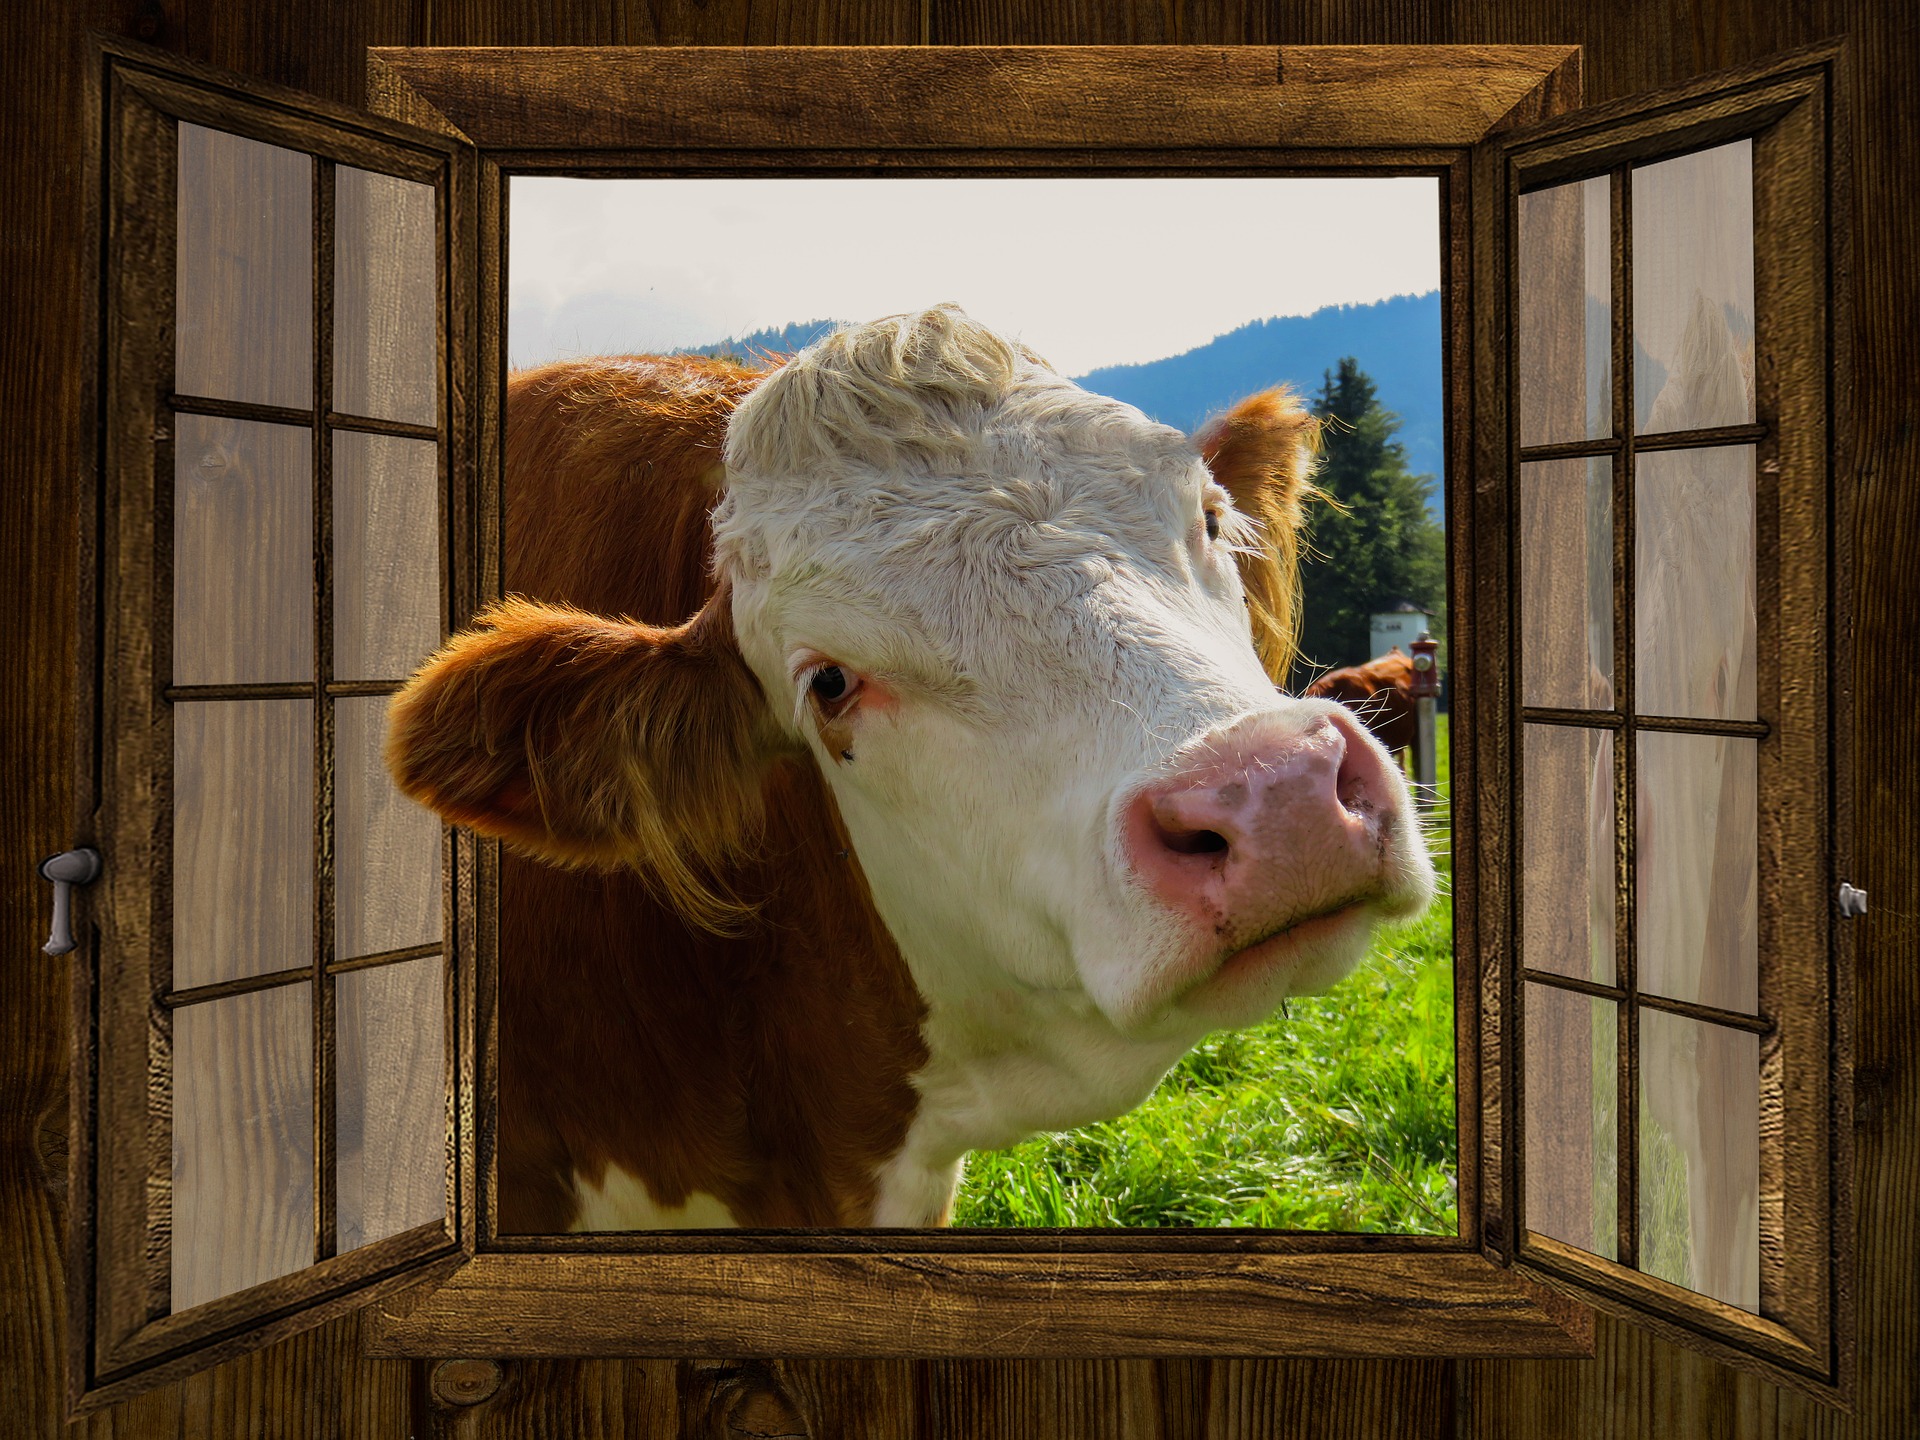 Cow through the window photo